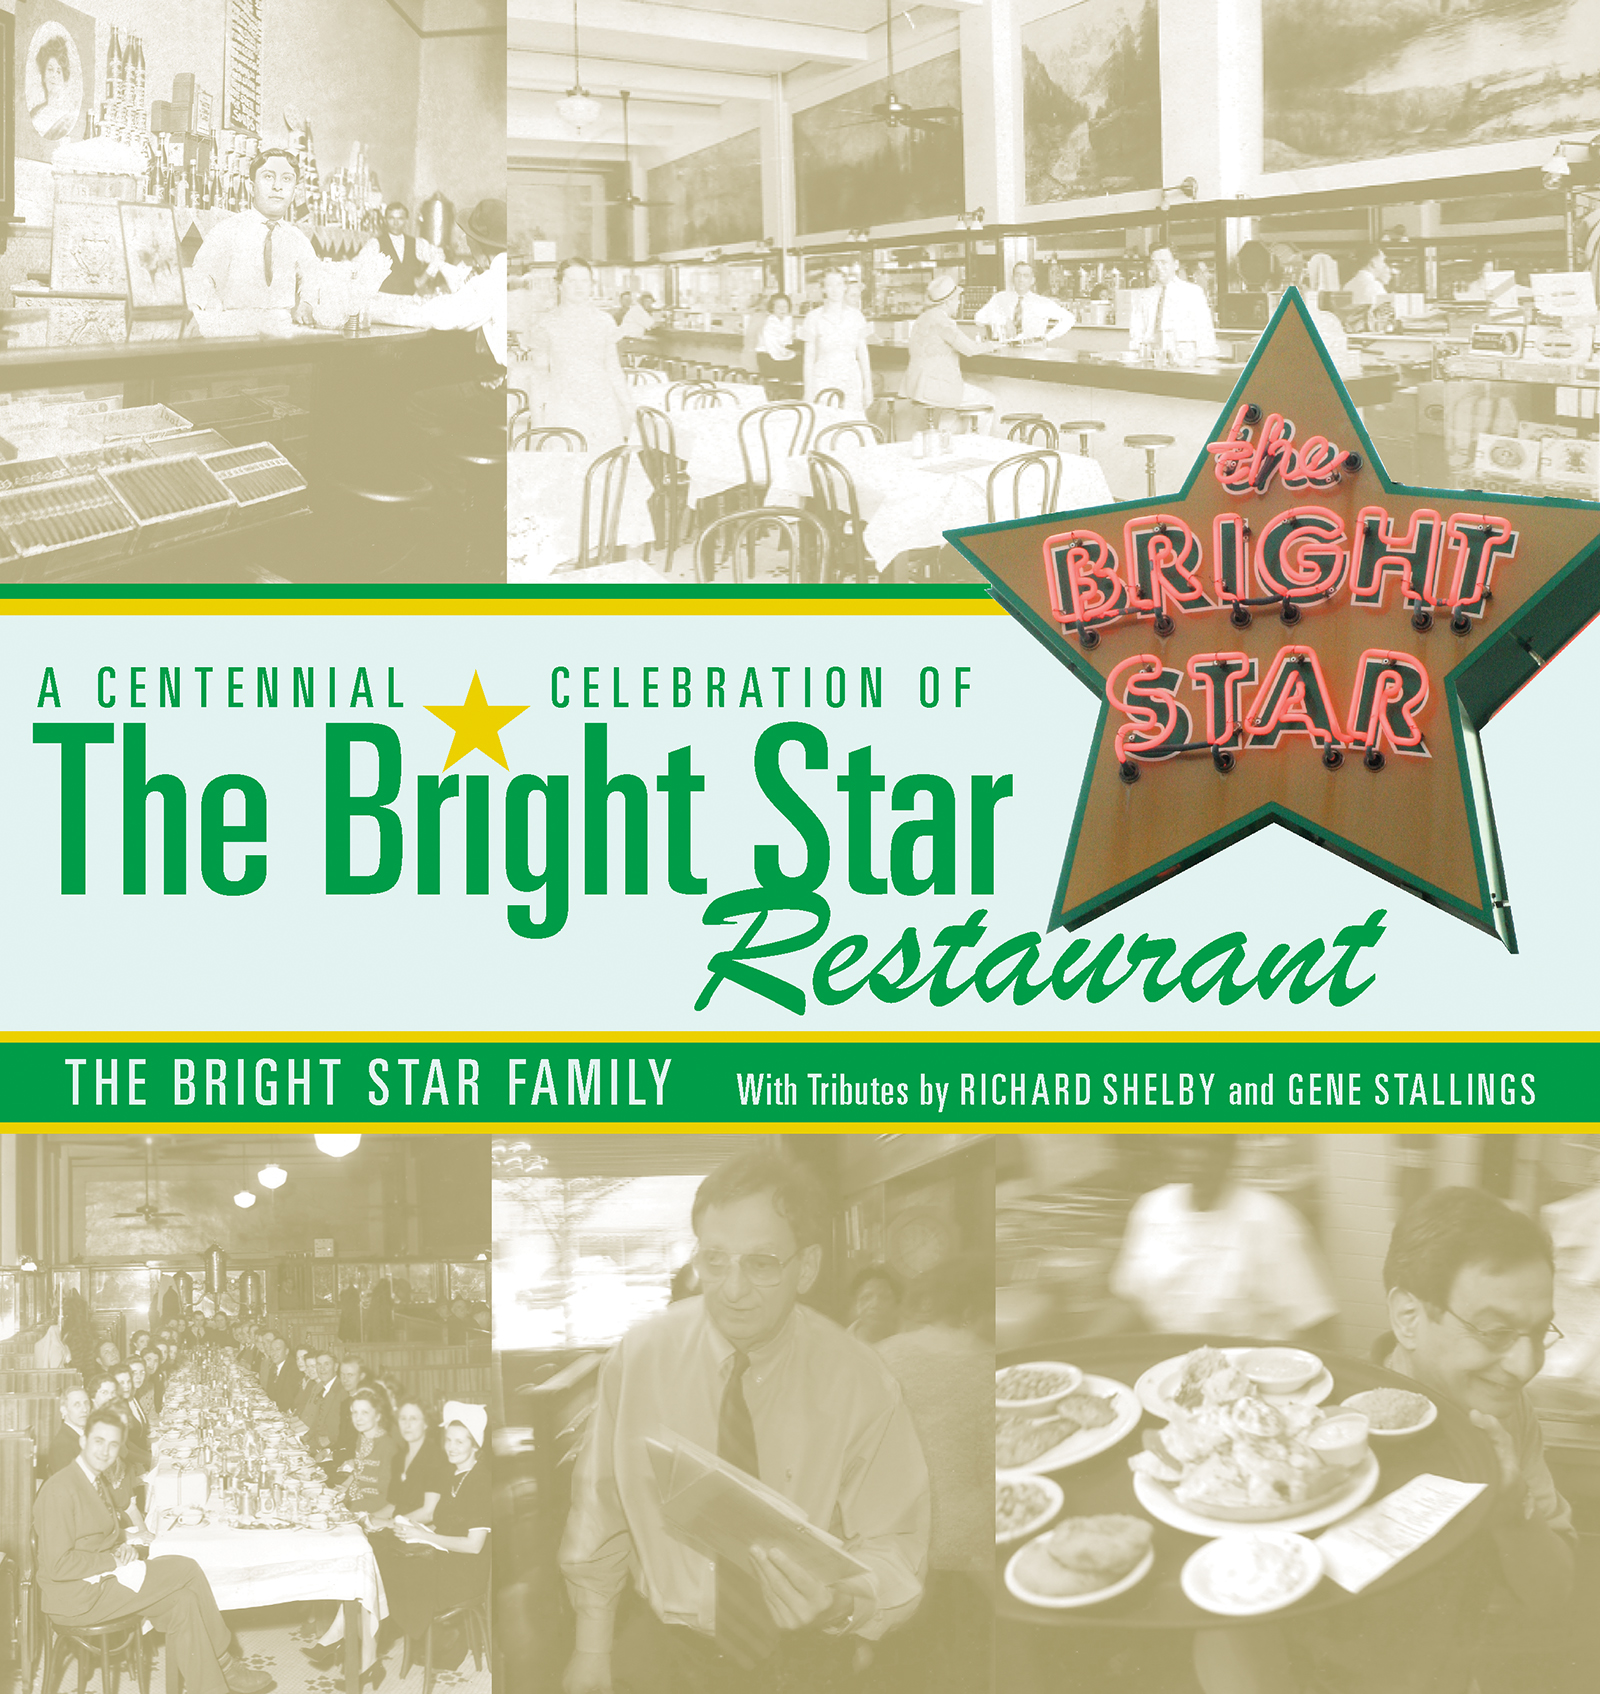 Centennial Celebration of the Bright Star Restaurant